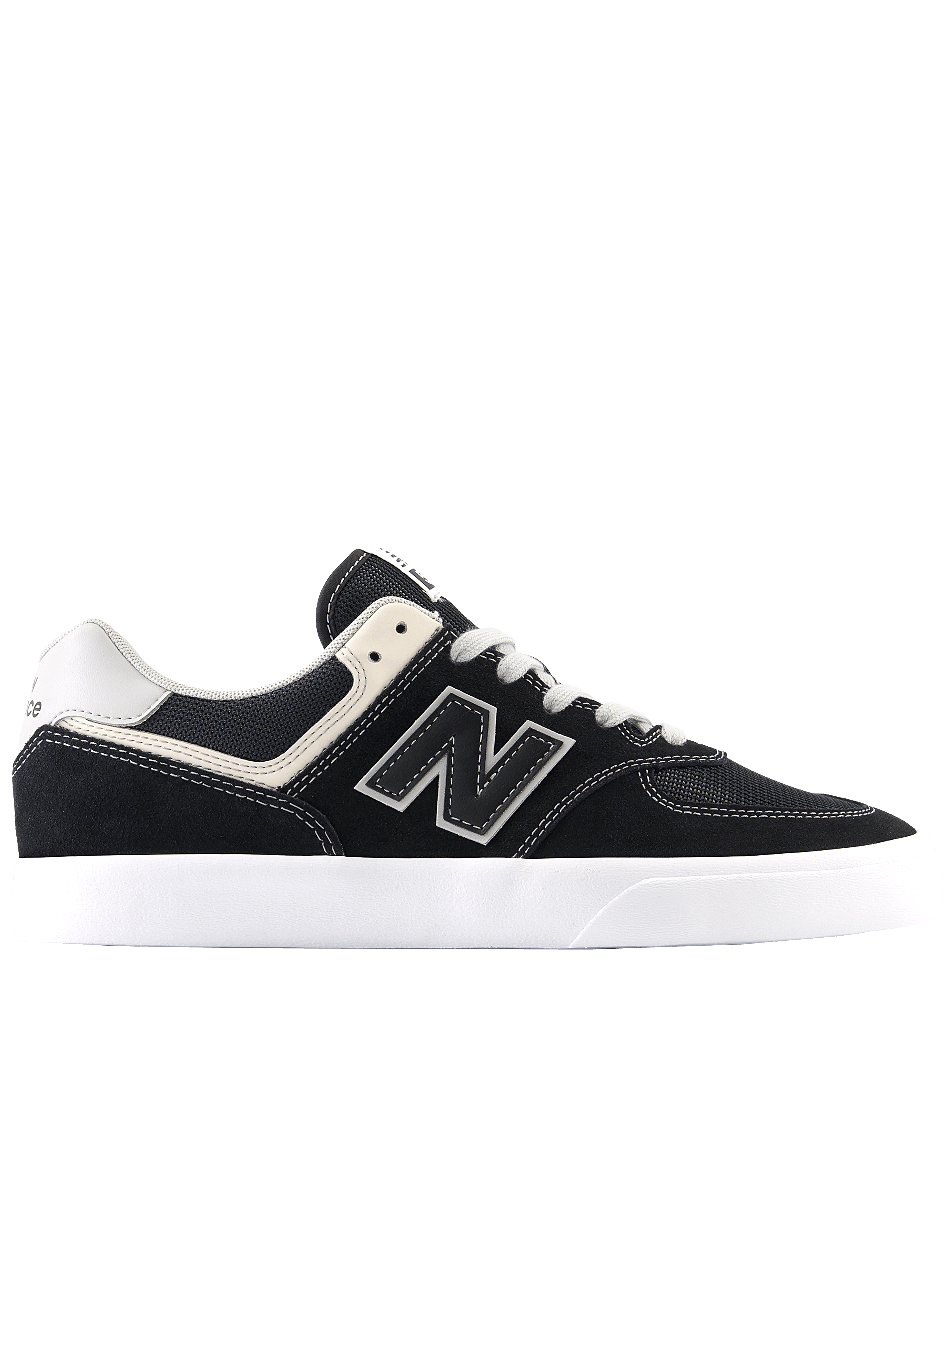 NM574VCB Vulc Shoe Black